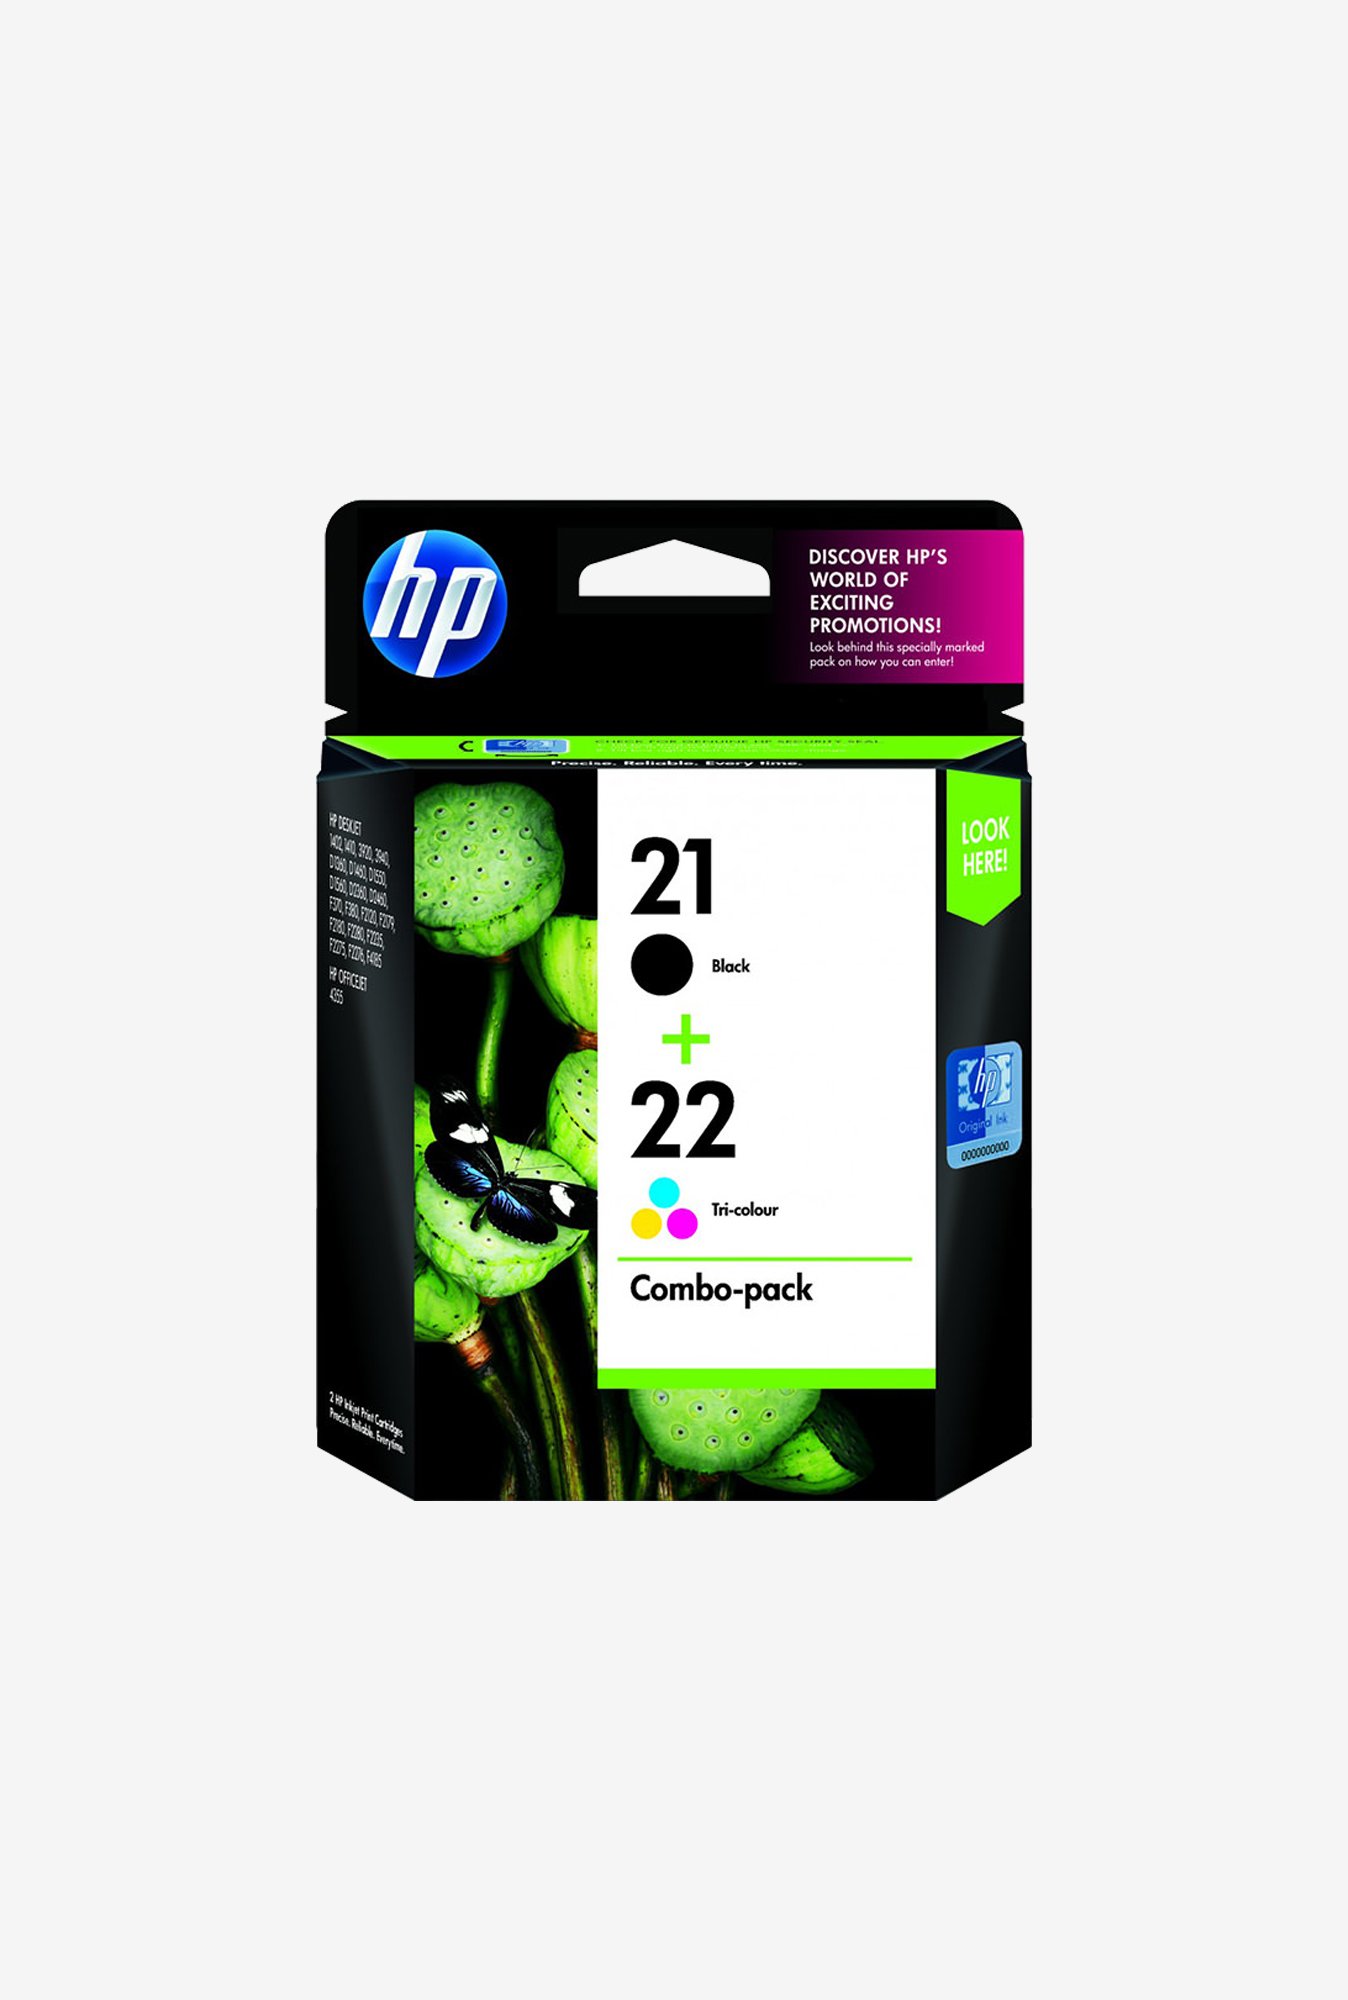 HP 21 Black/22 Tri-color Combo-pack Original Ink Cartridges